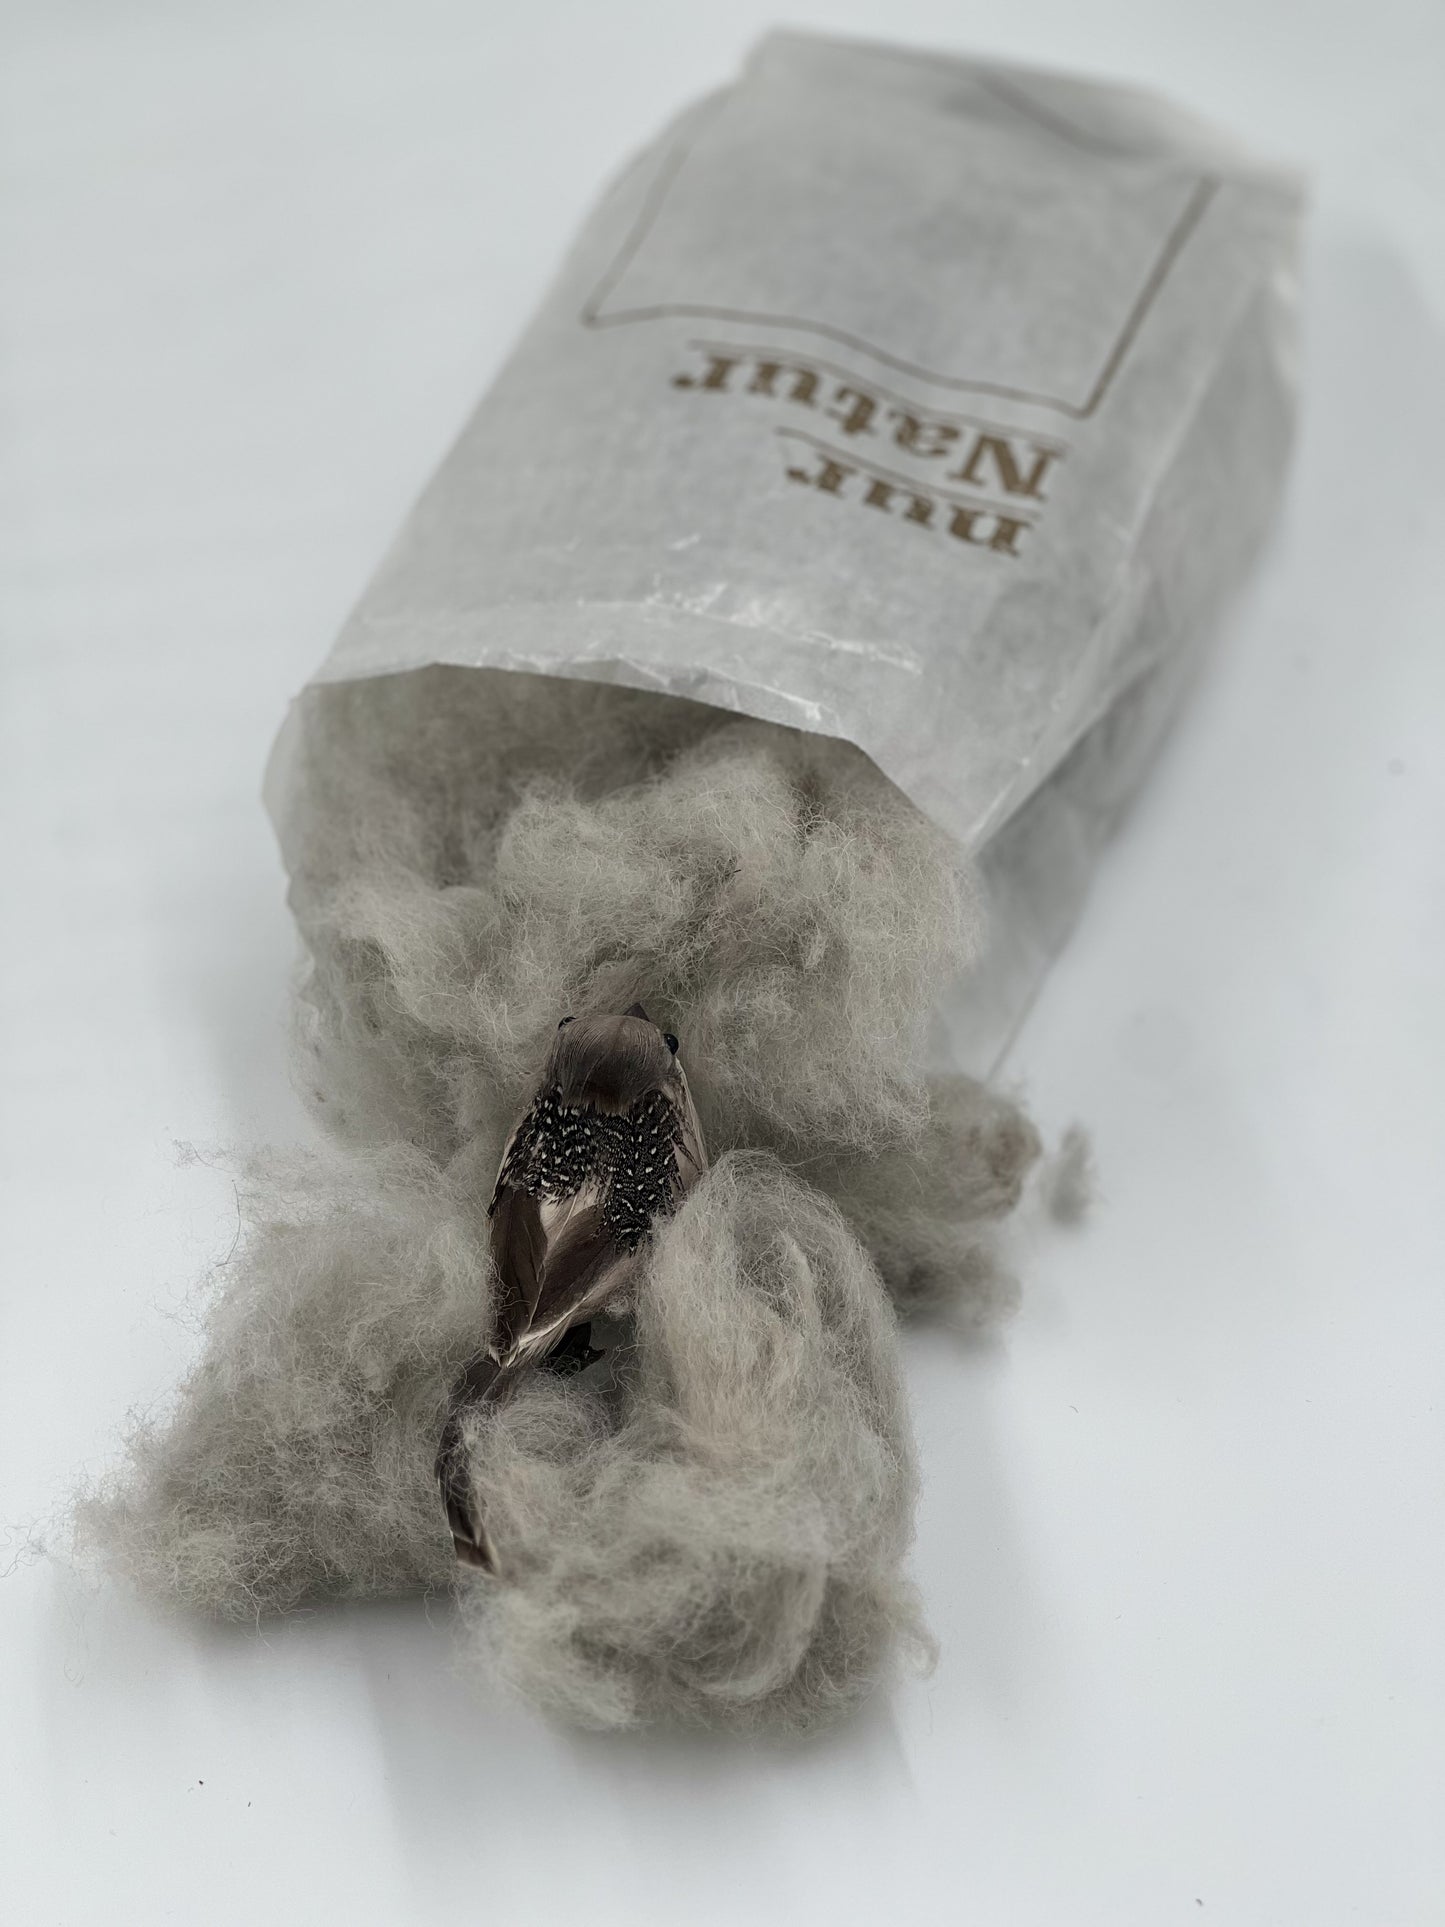 Vogel sammelt Nistmaterial aus Alpakawolle